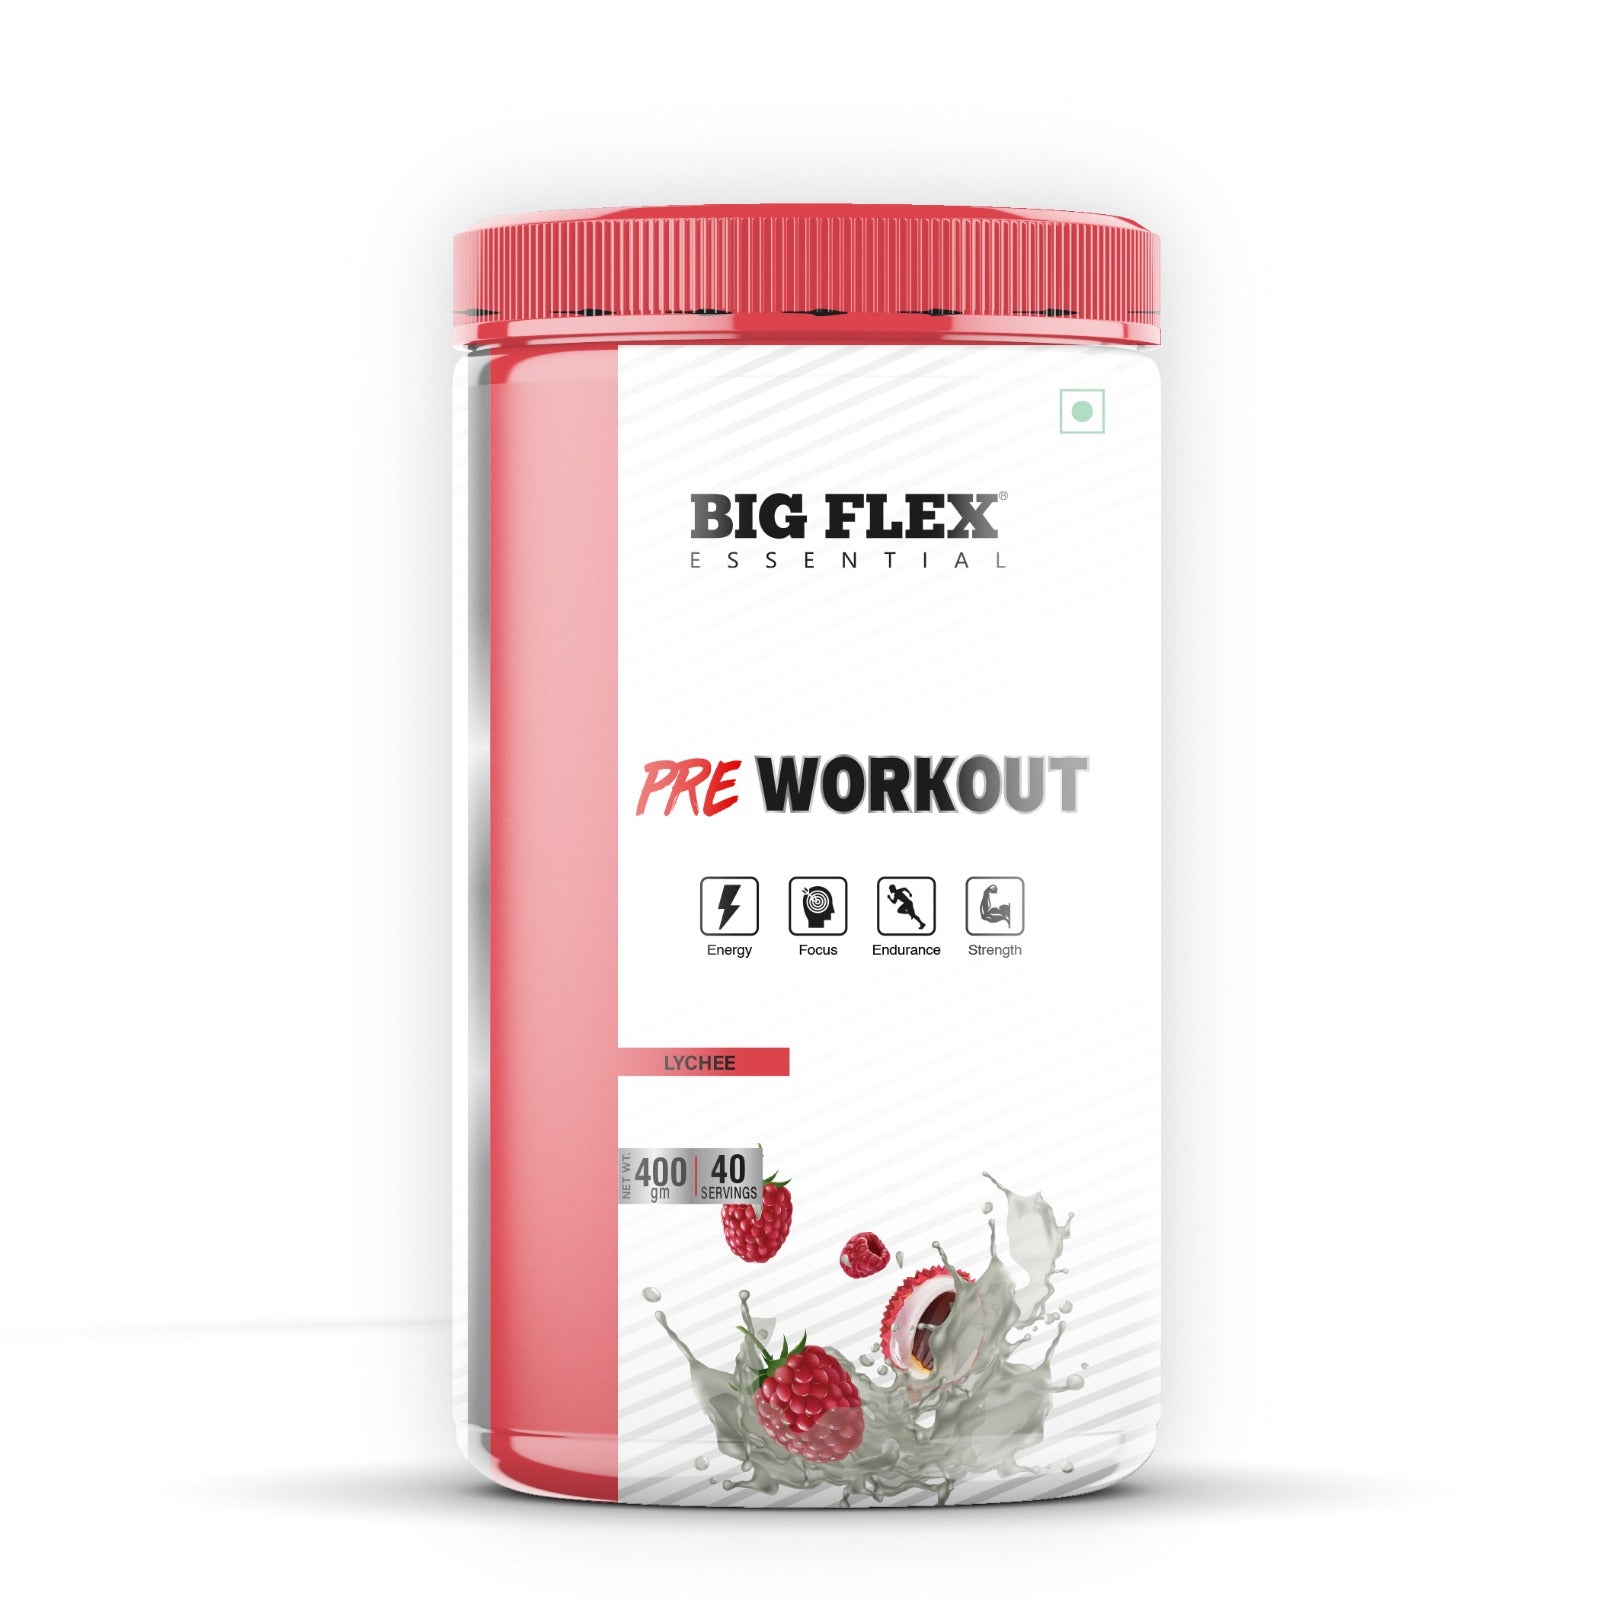 Bigflex Essential Pre - Workout. (400Gm) - Jar